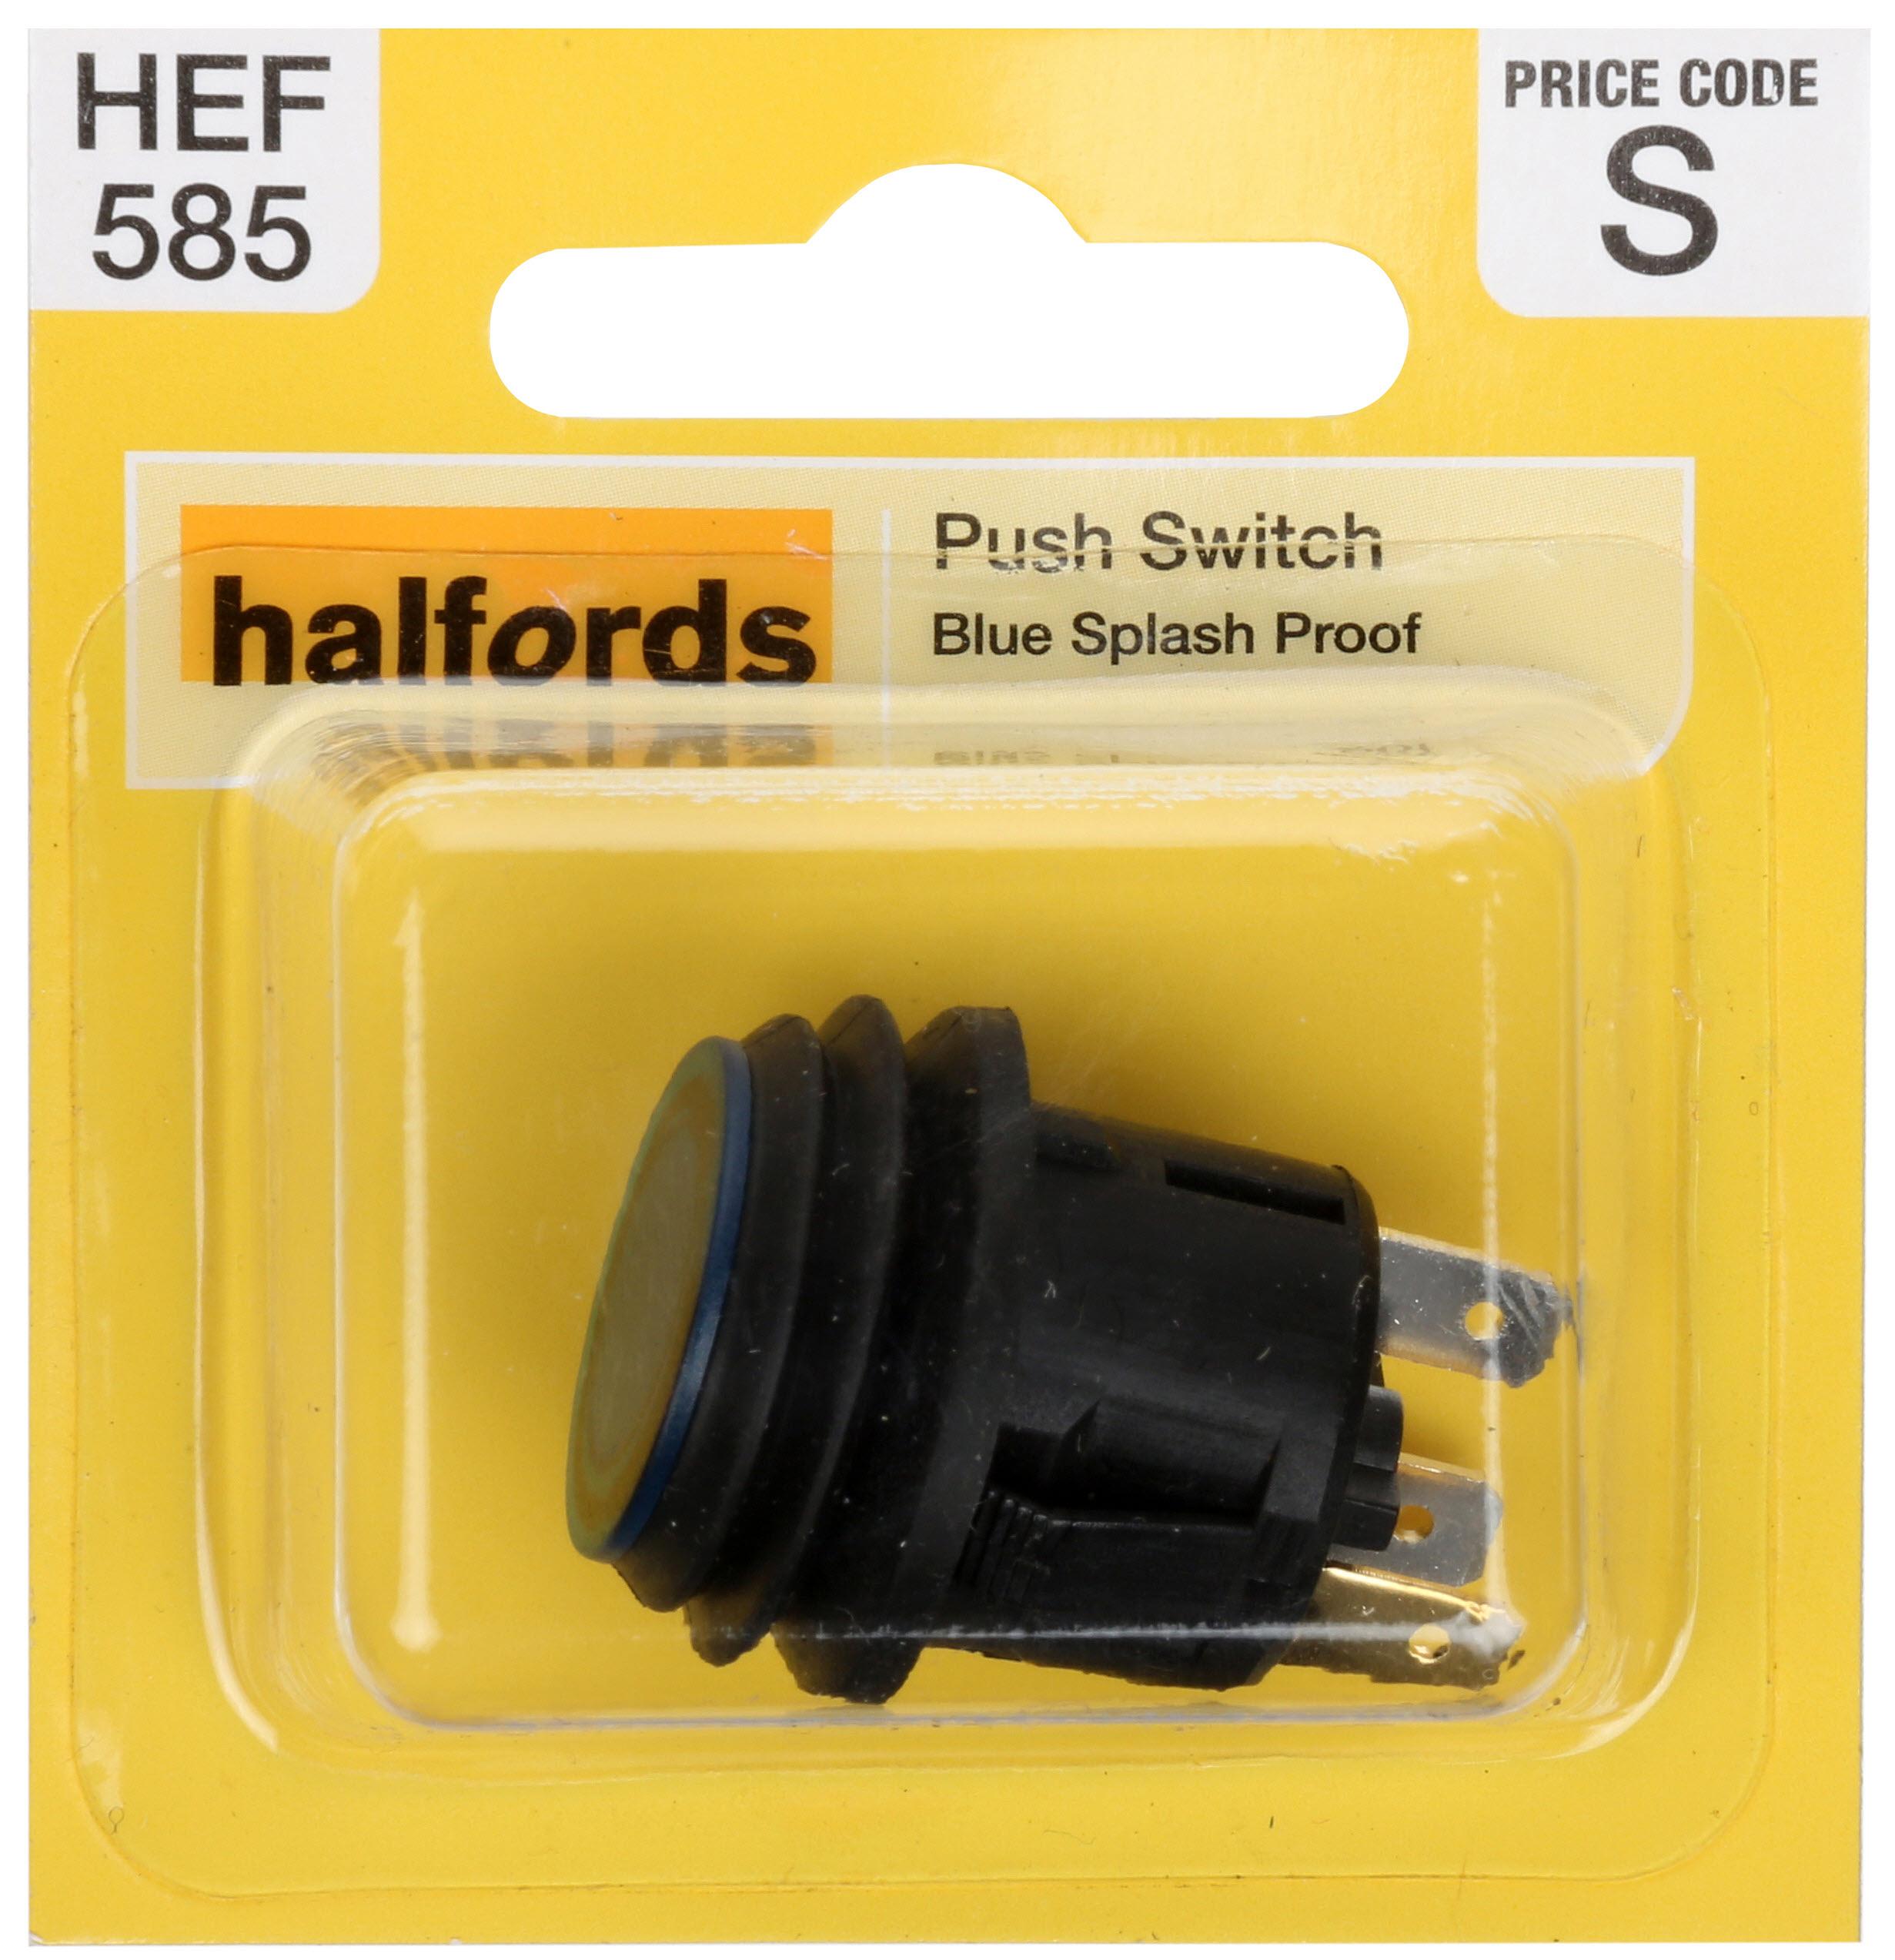 Halfords Push Switch On/Off Splash Proof Blue (Hef585)